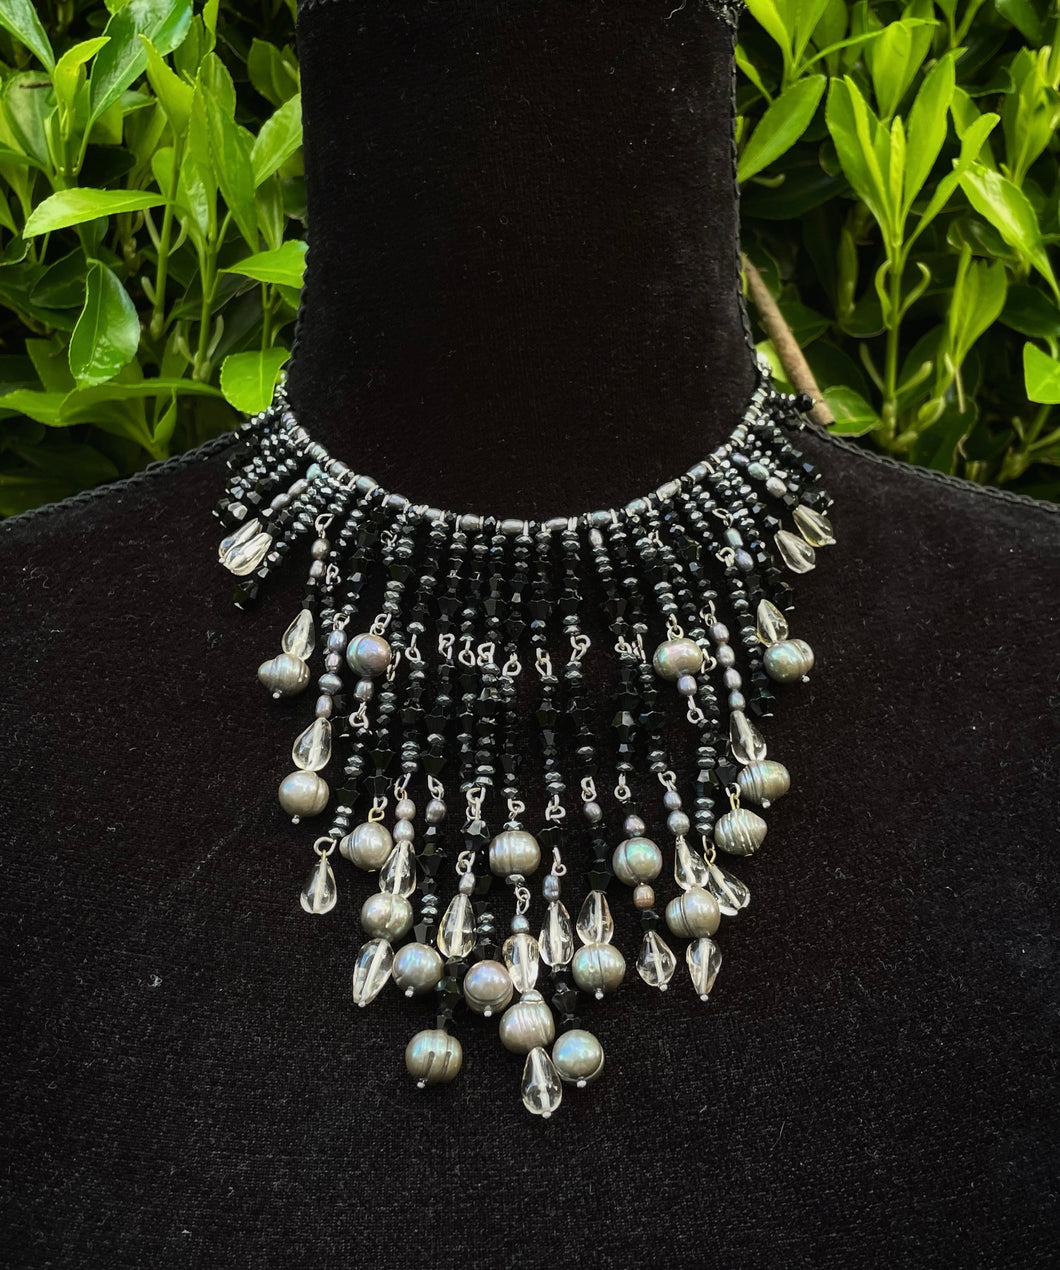 Victorian widow necklace